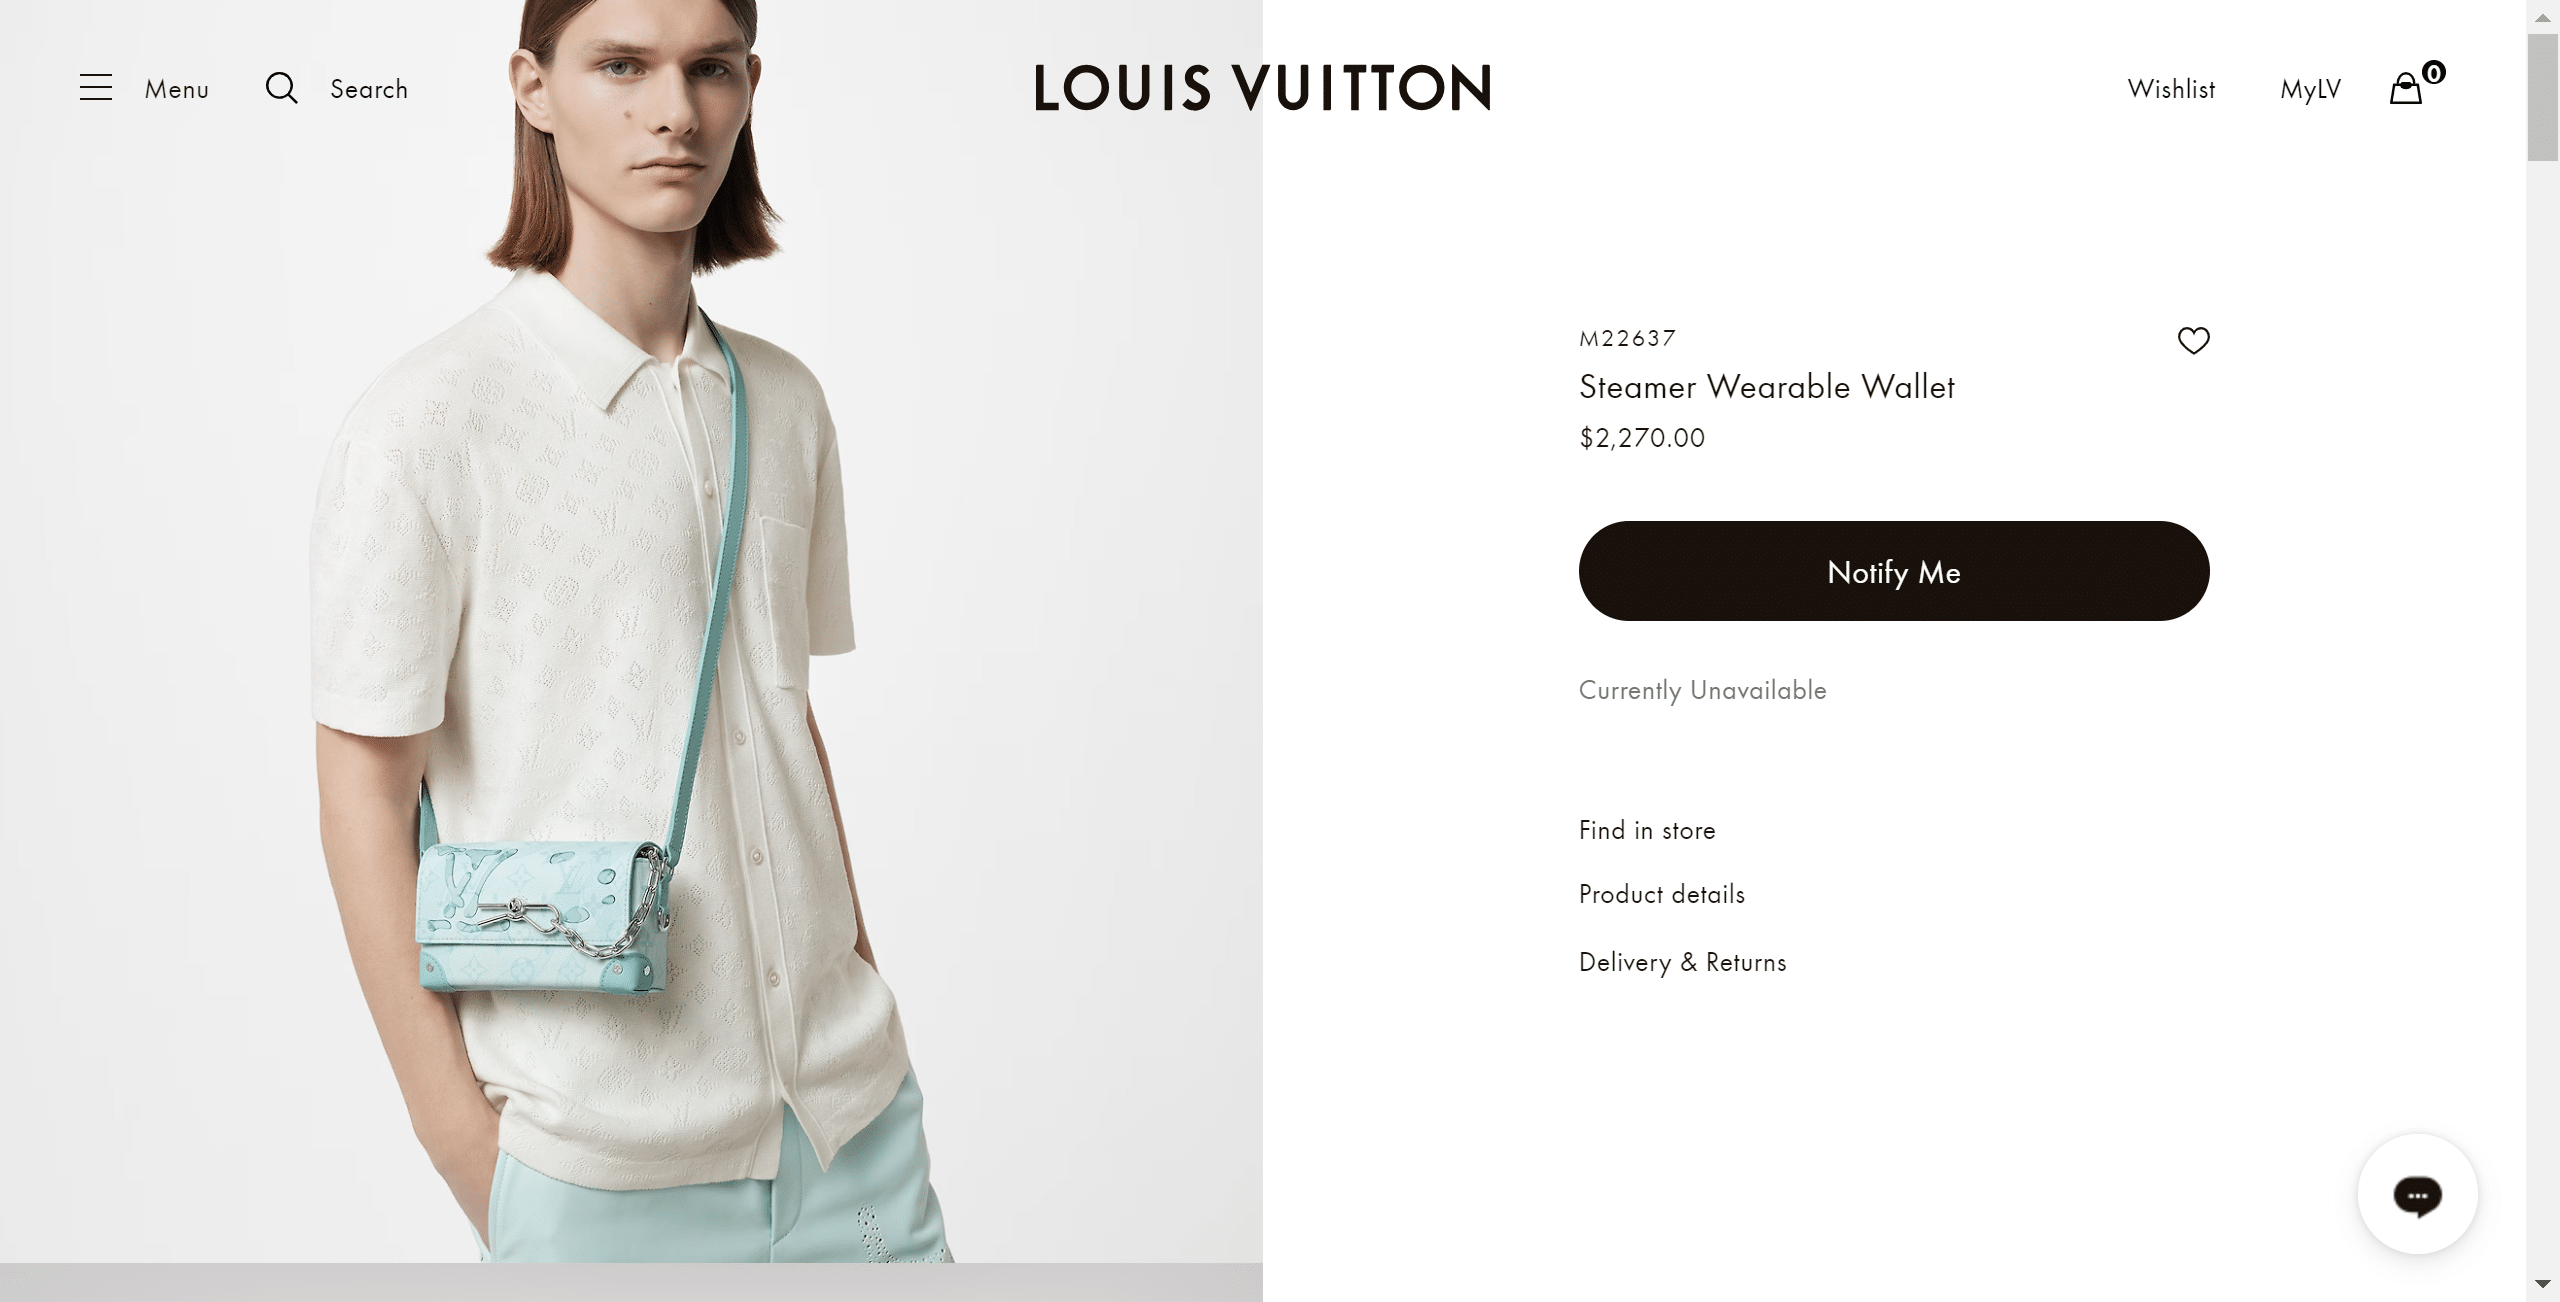 Replica Louis Vuitton Steamer Wearable Wallet Men M22637